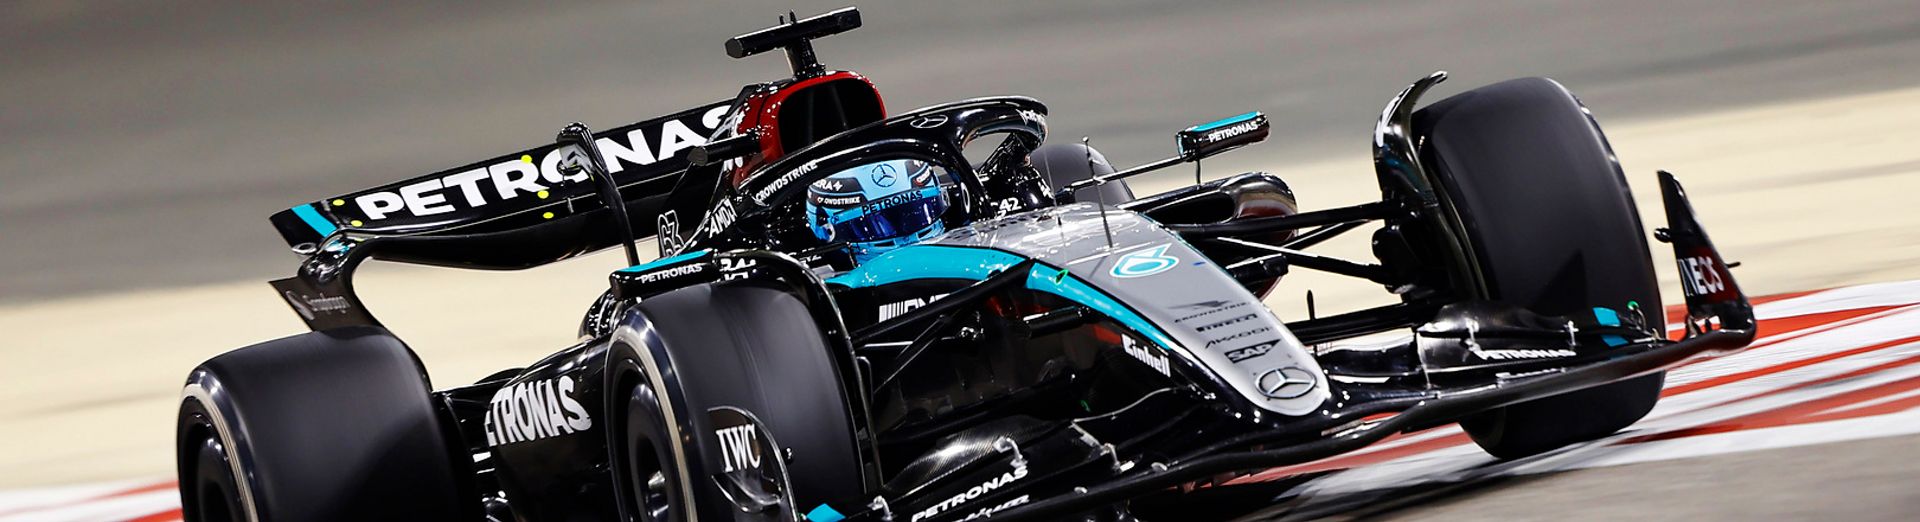 Mercedes-AMG PETRONAS Formula One team race car driving on race track